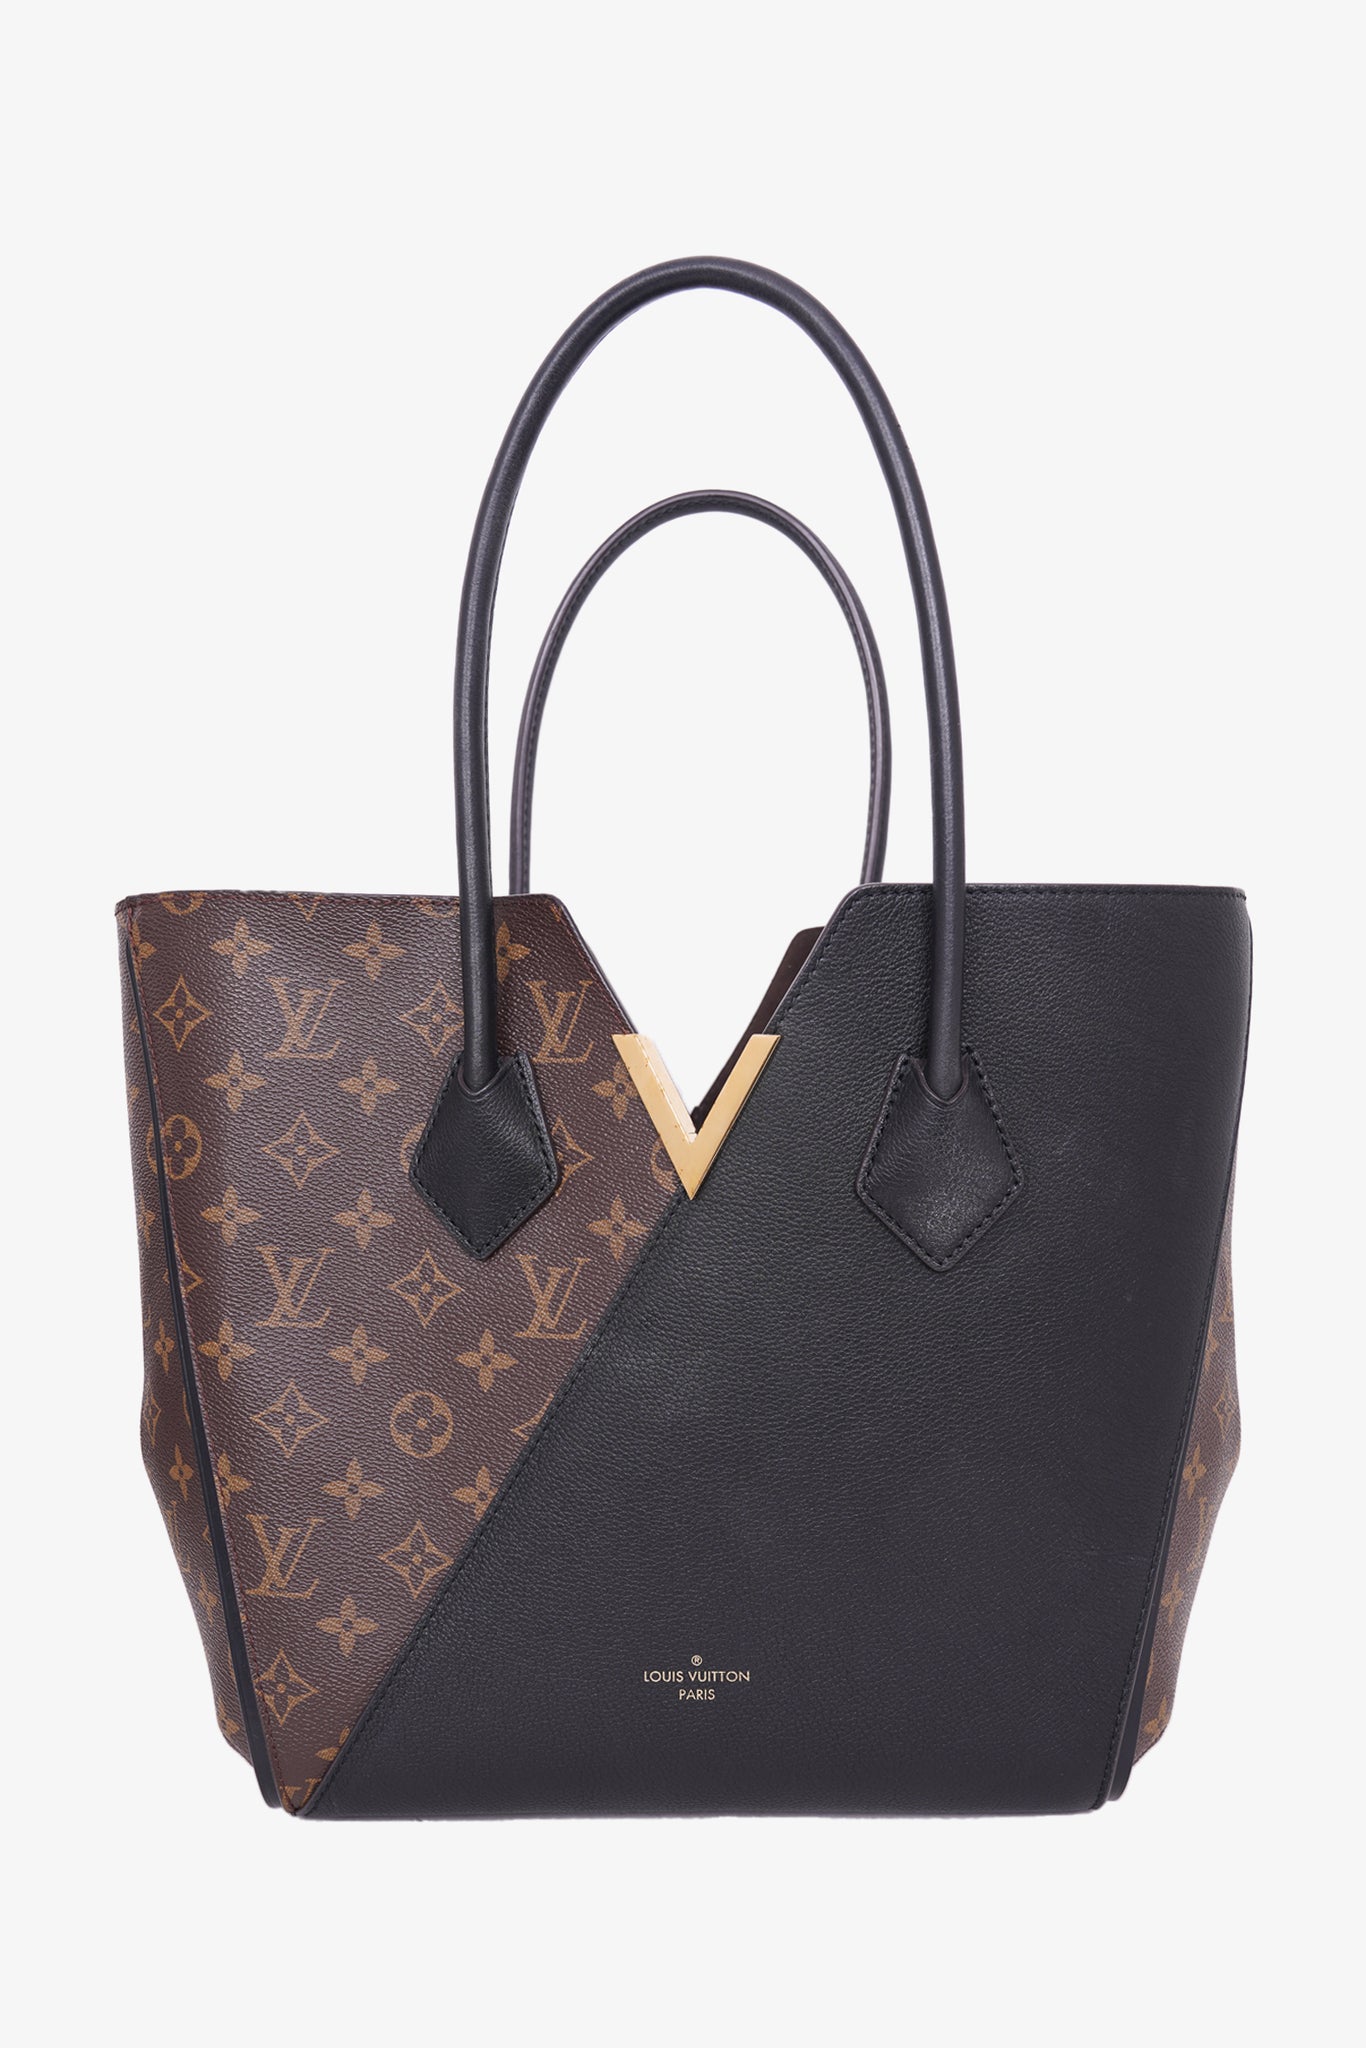 Louis Vuitton W Bag Purse - clothing & accessories - by owner - apparel  sale - craigslist